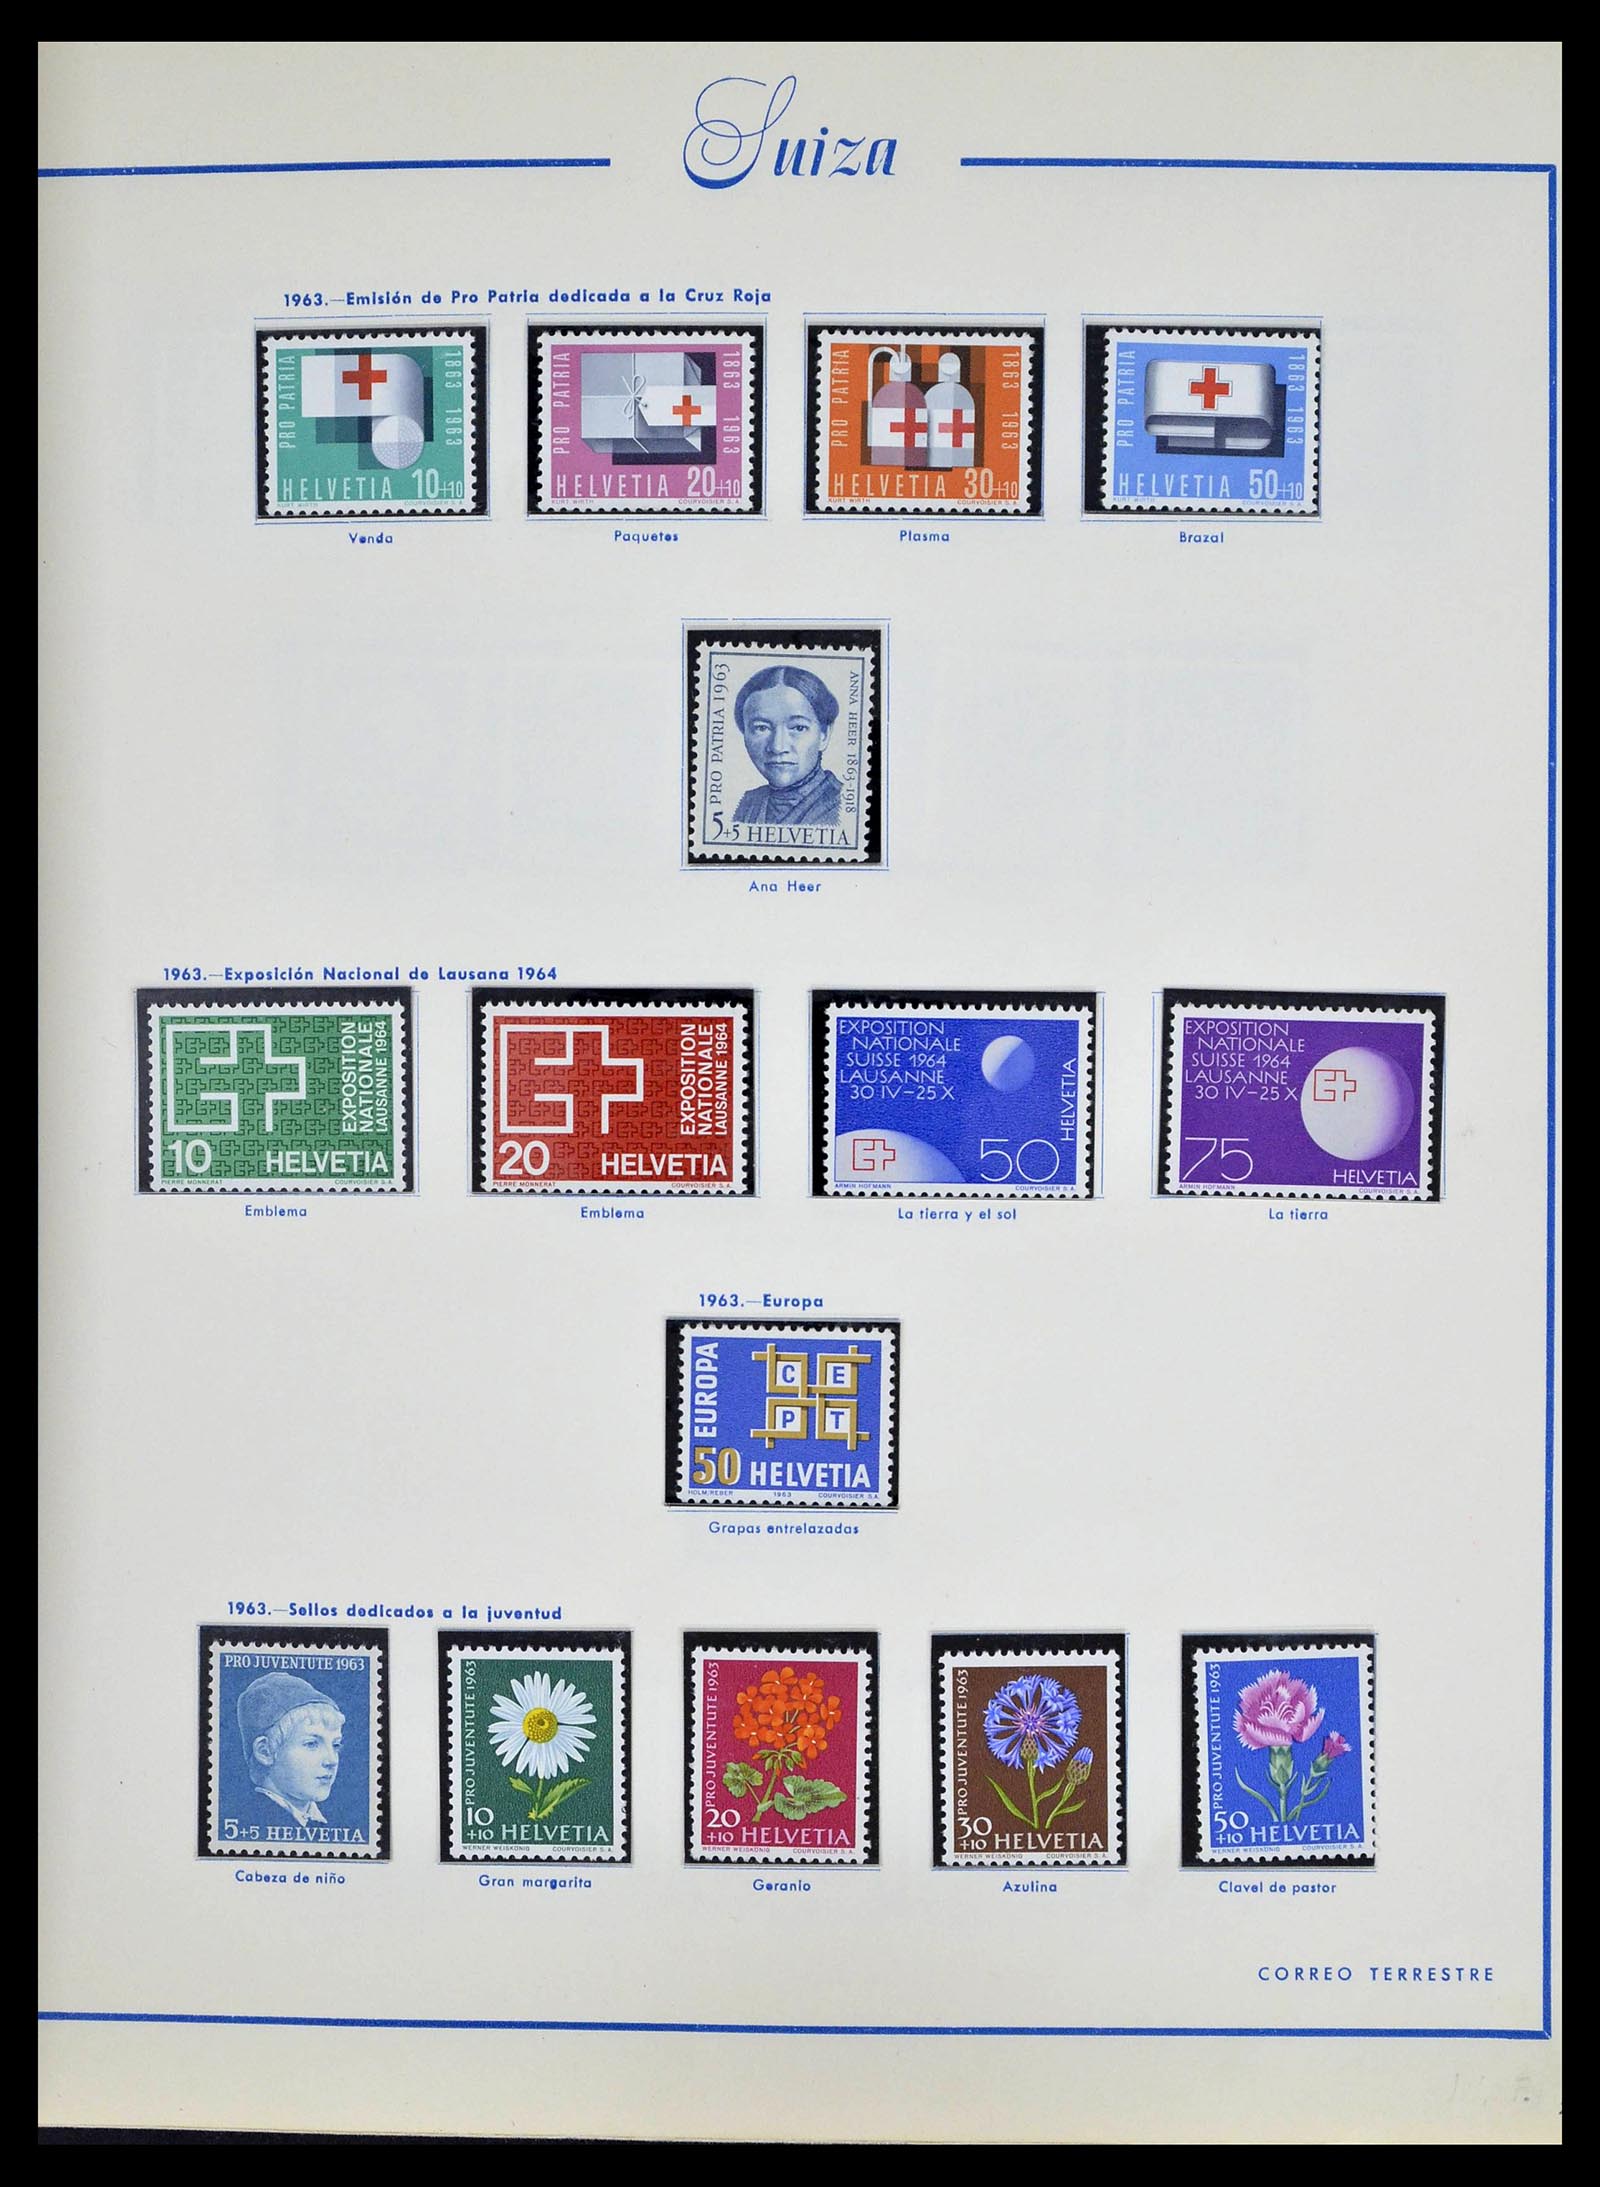 39217 0042 - Stamp collection 39217 Switzerland 1850-1986.